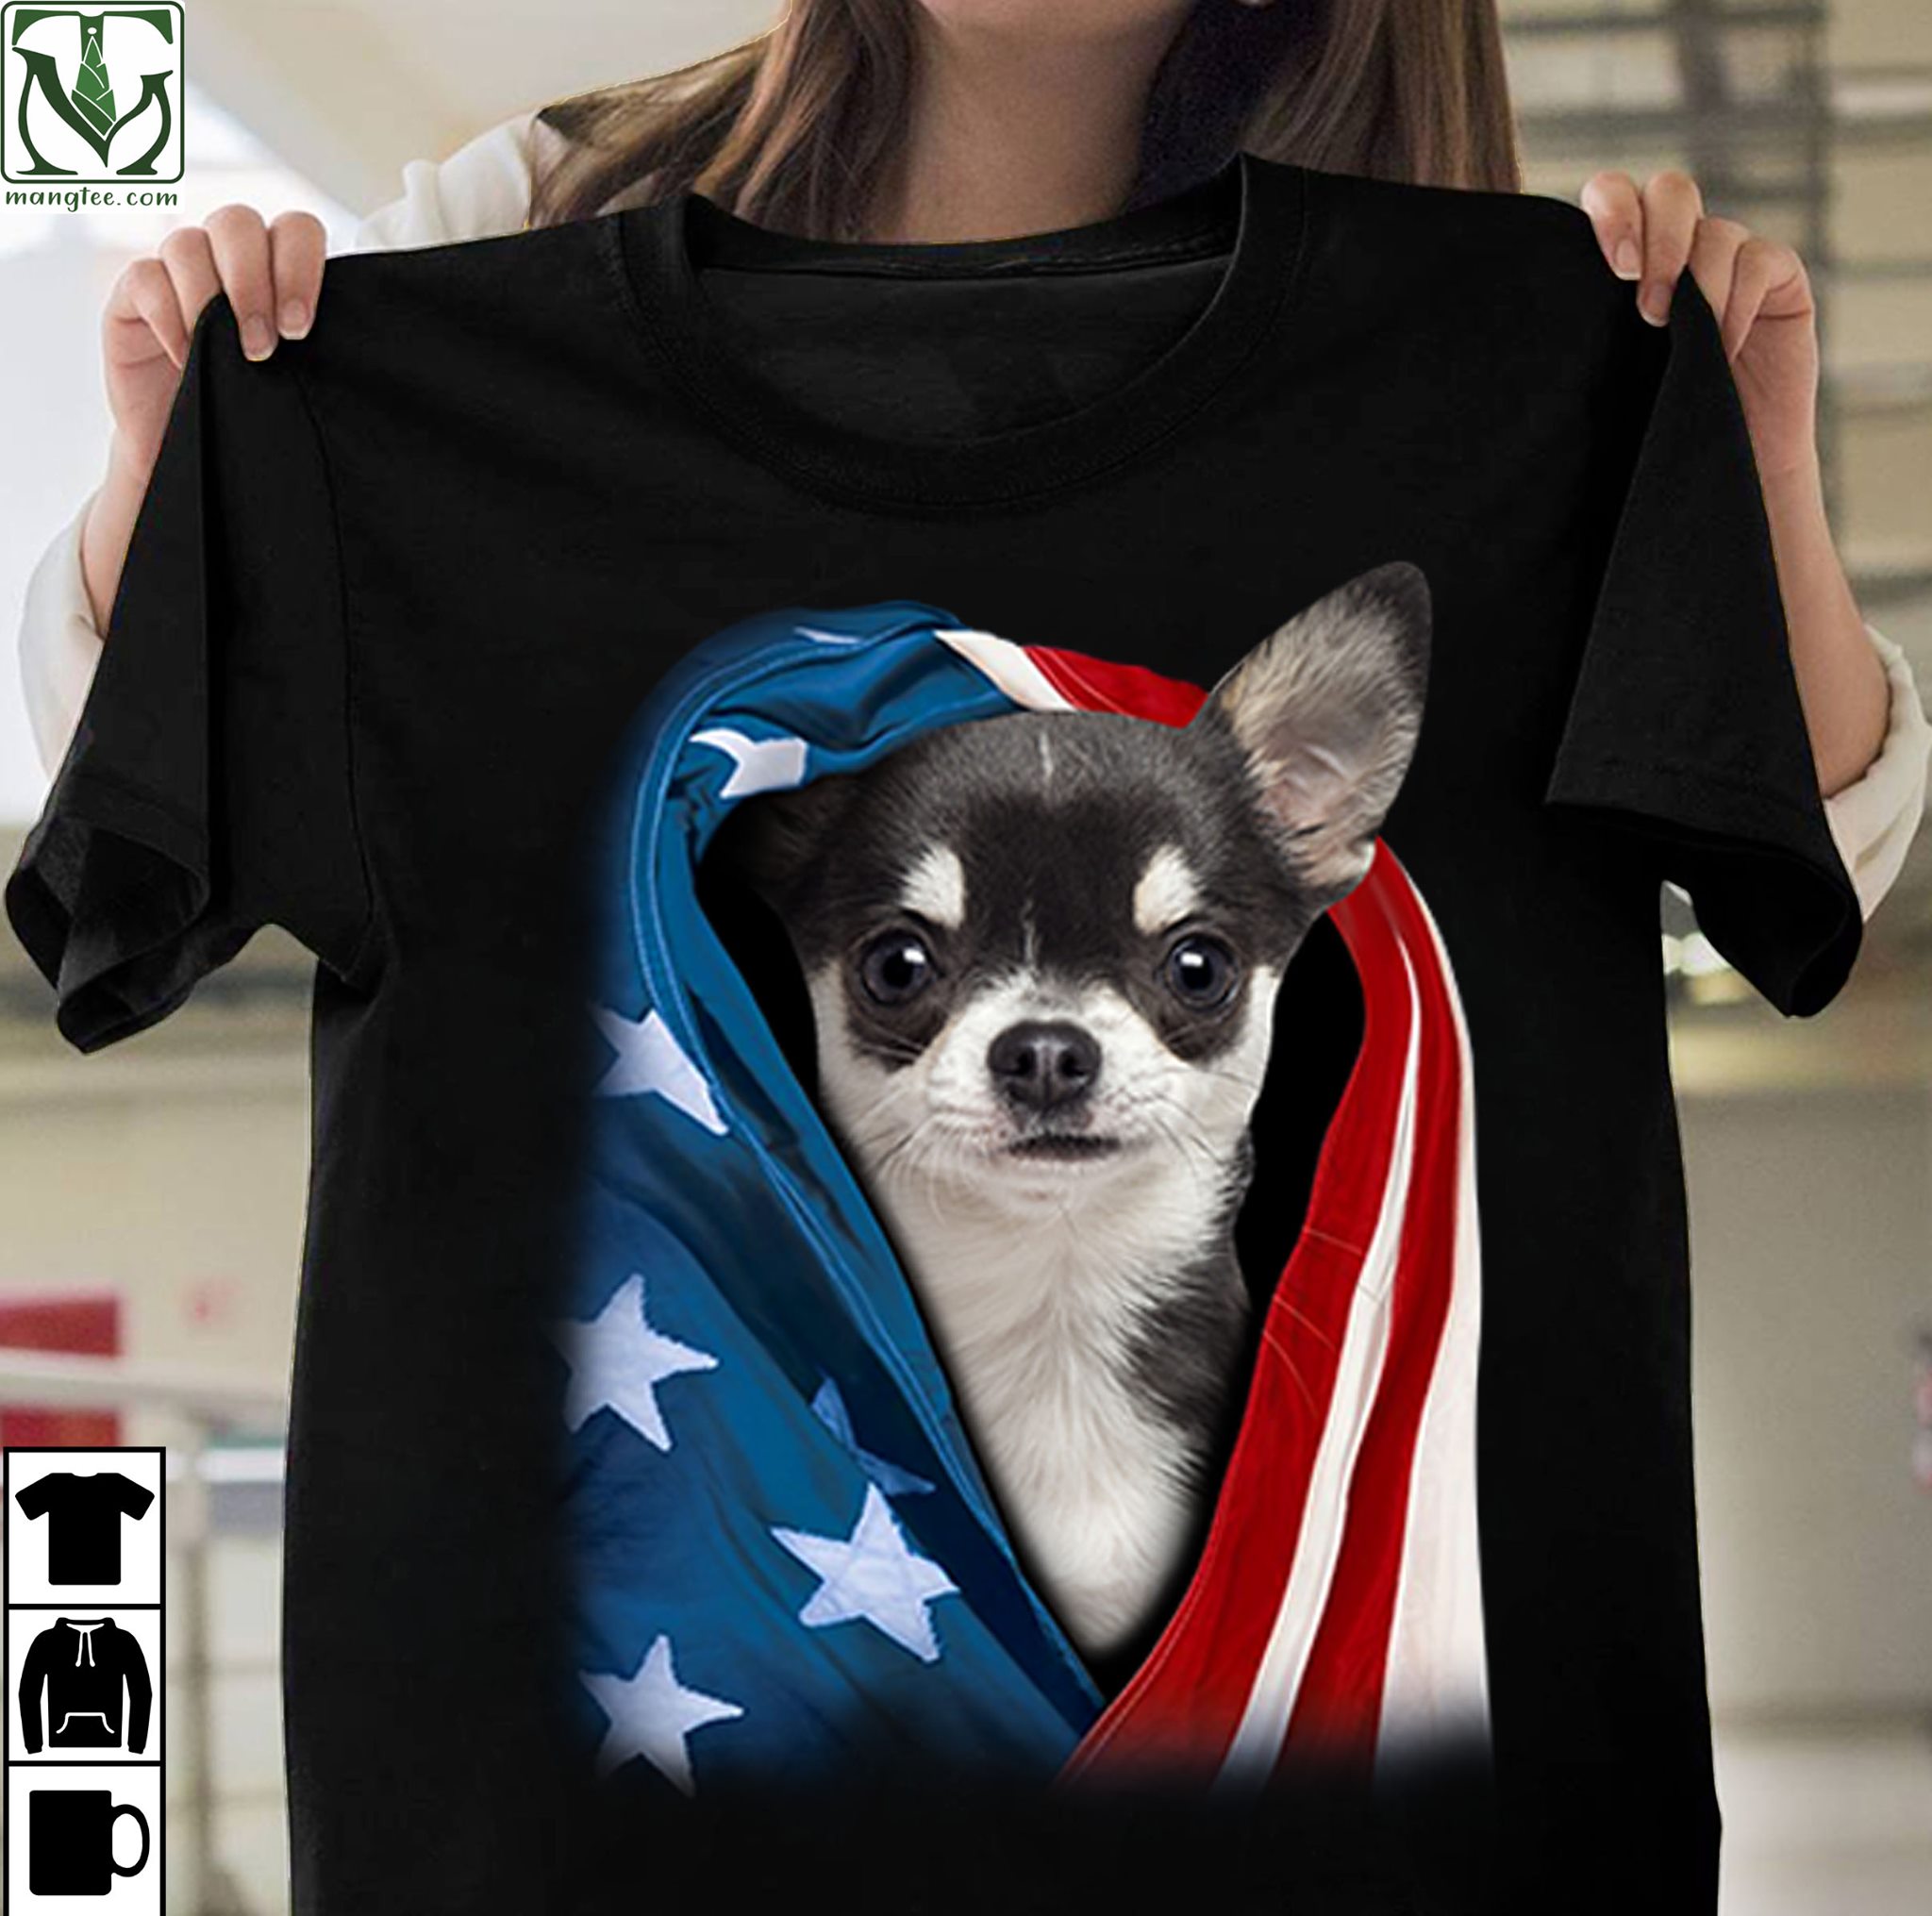 Chihuahua dog, America flag - Dog lover